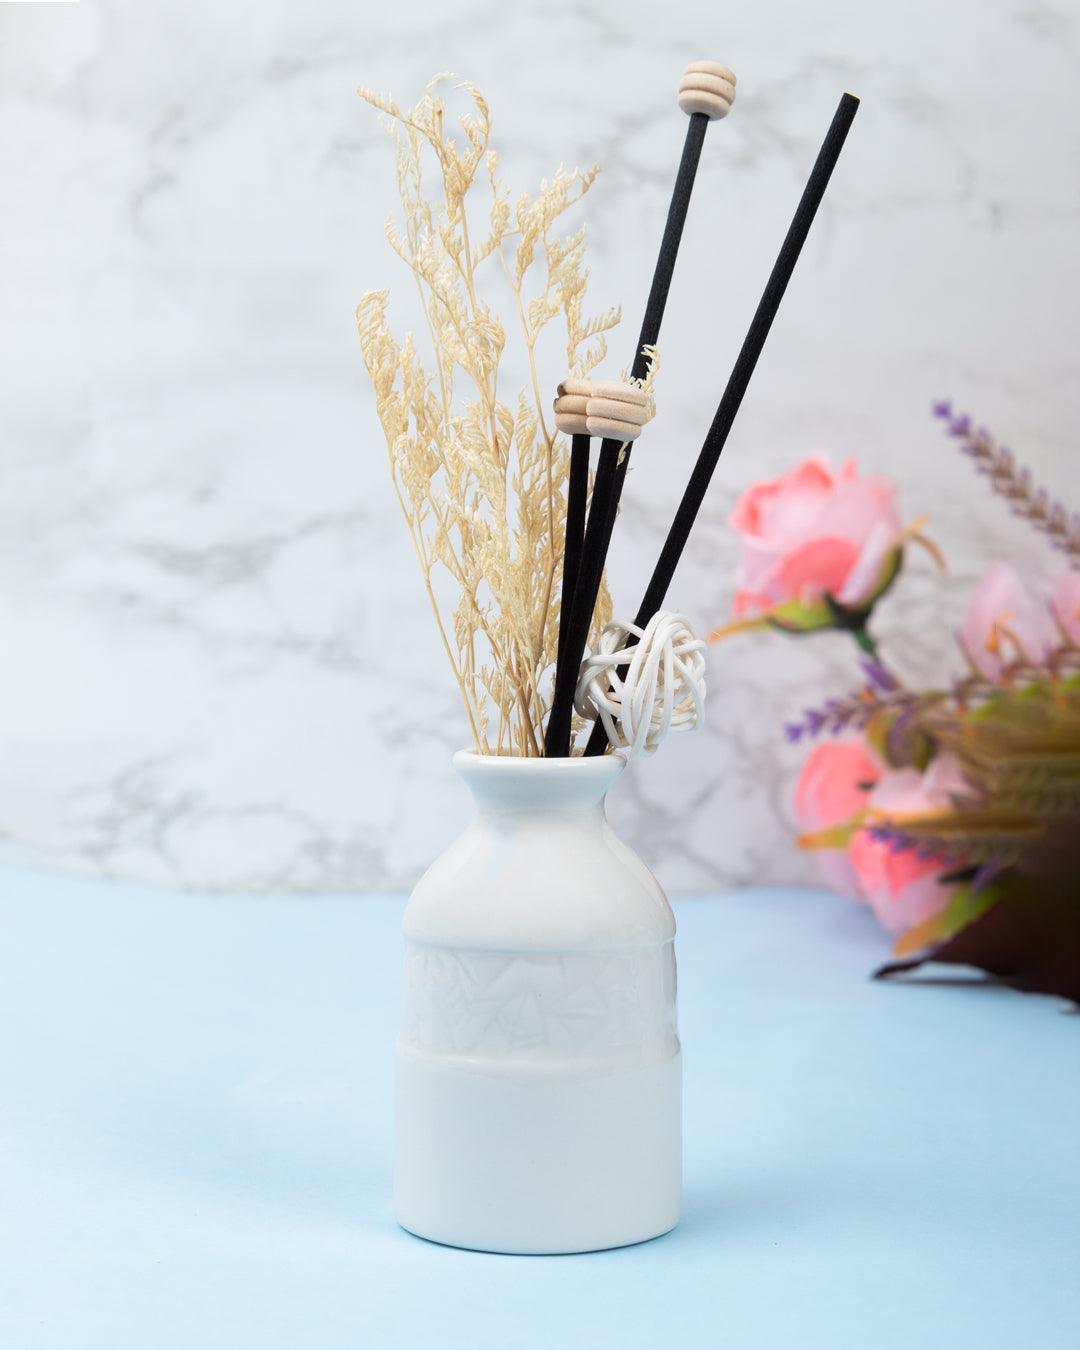 Reed Diffuser Set, Vanilla Fragrance Pot & Reed Stick, Ceramic, White, 30 mL - MARKET 99